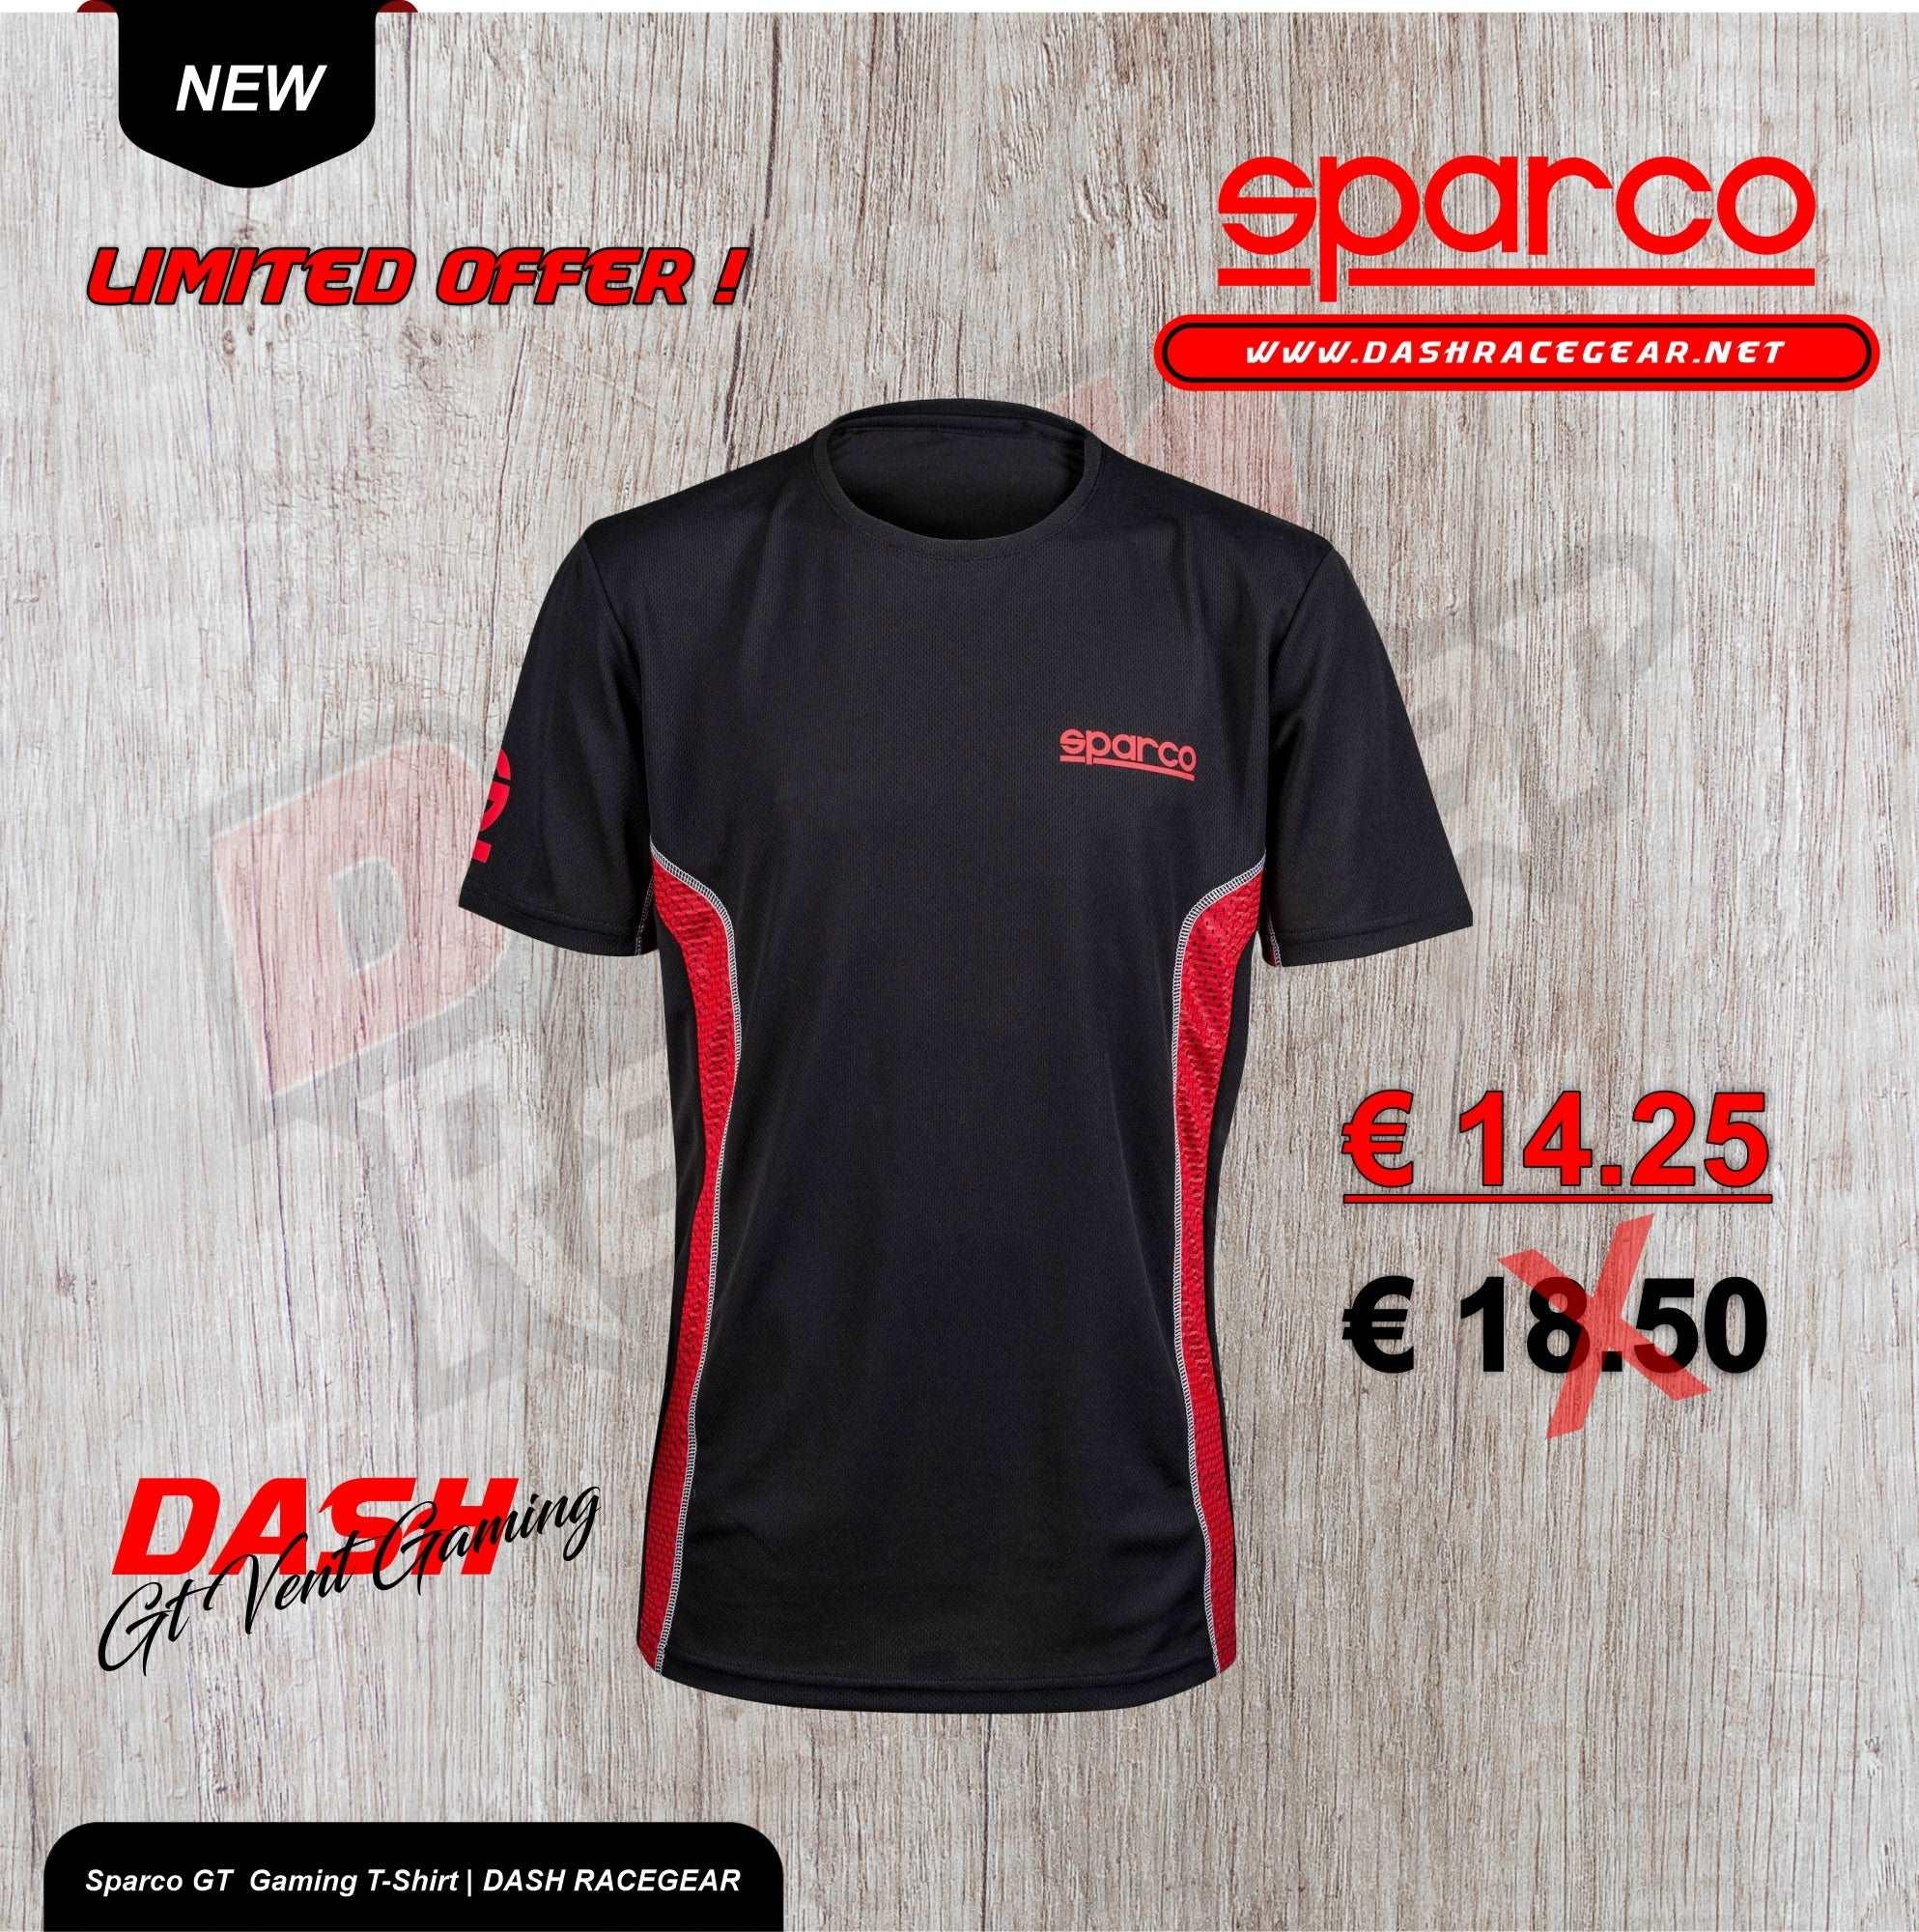 Sparco GT Gaming T-Shirt | DASH RACEGEAR DASH RACEGEAR